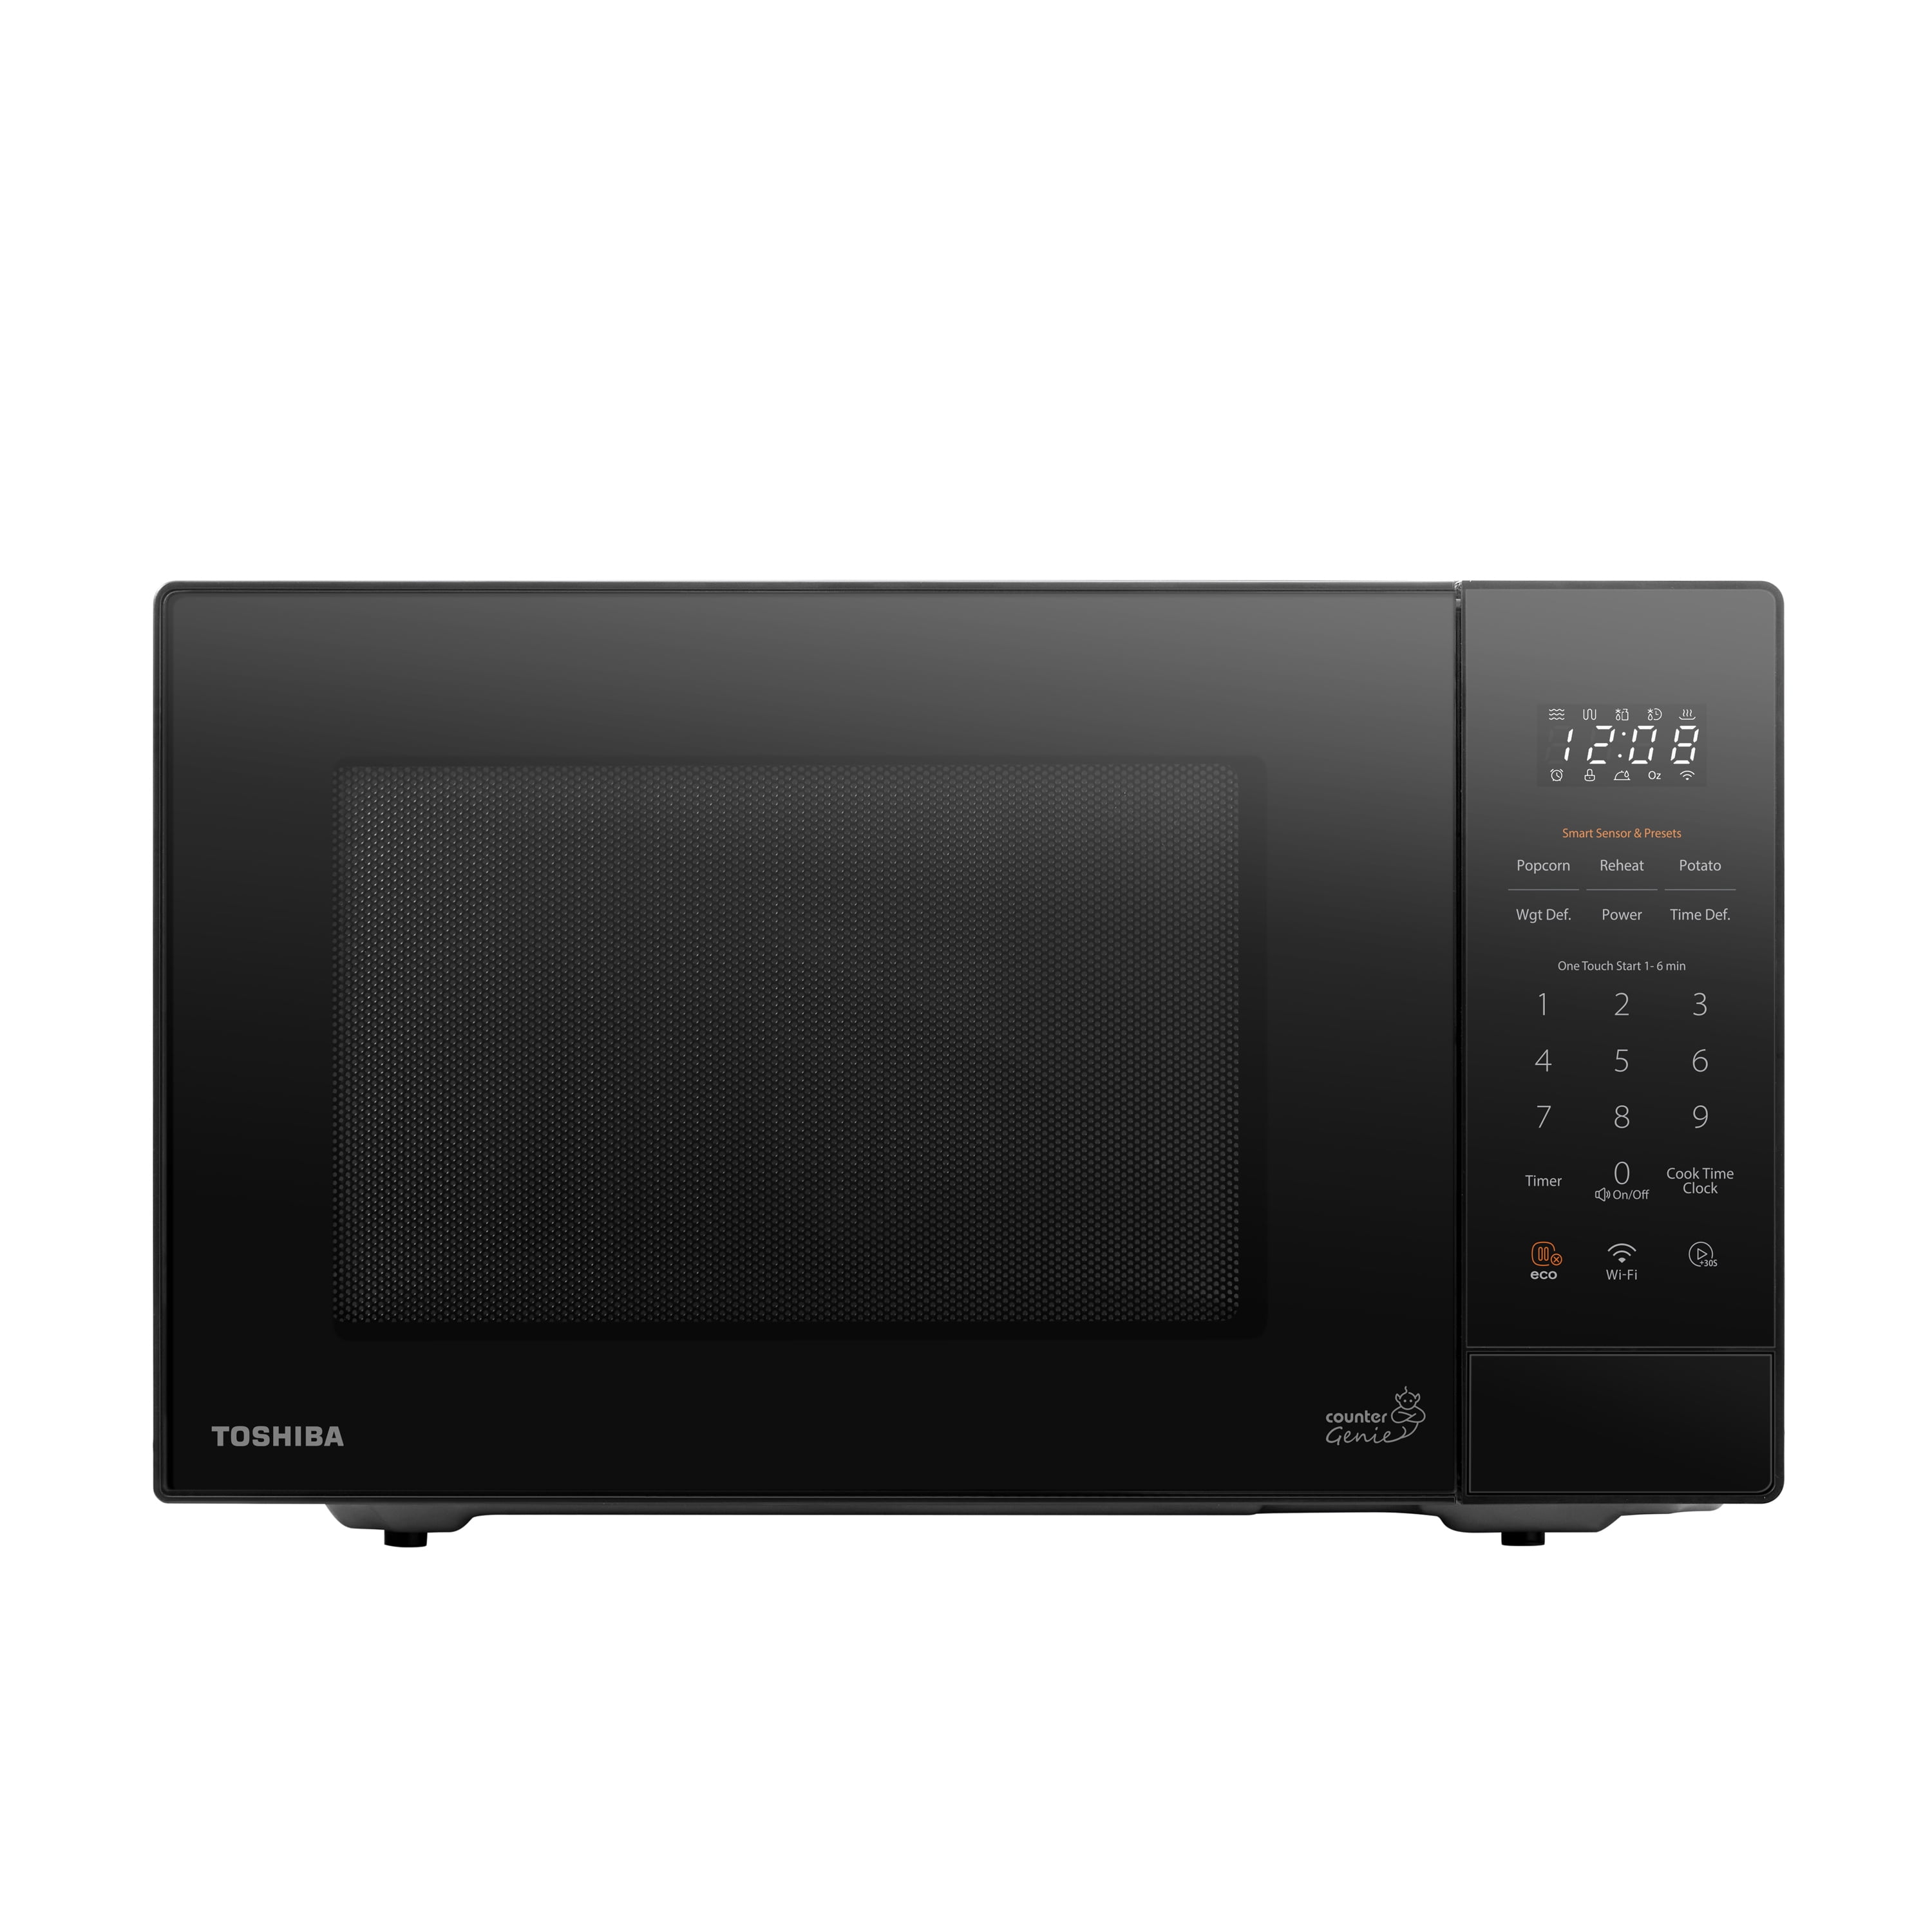 PC/タブレット PC周辺機器 Toshiba 1.4 Cu ft Smart Microwave Oven, 1100 Watts, Black